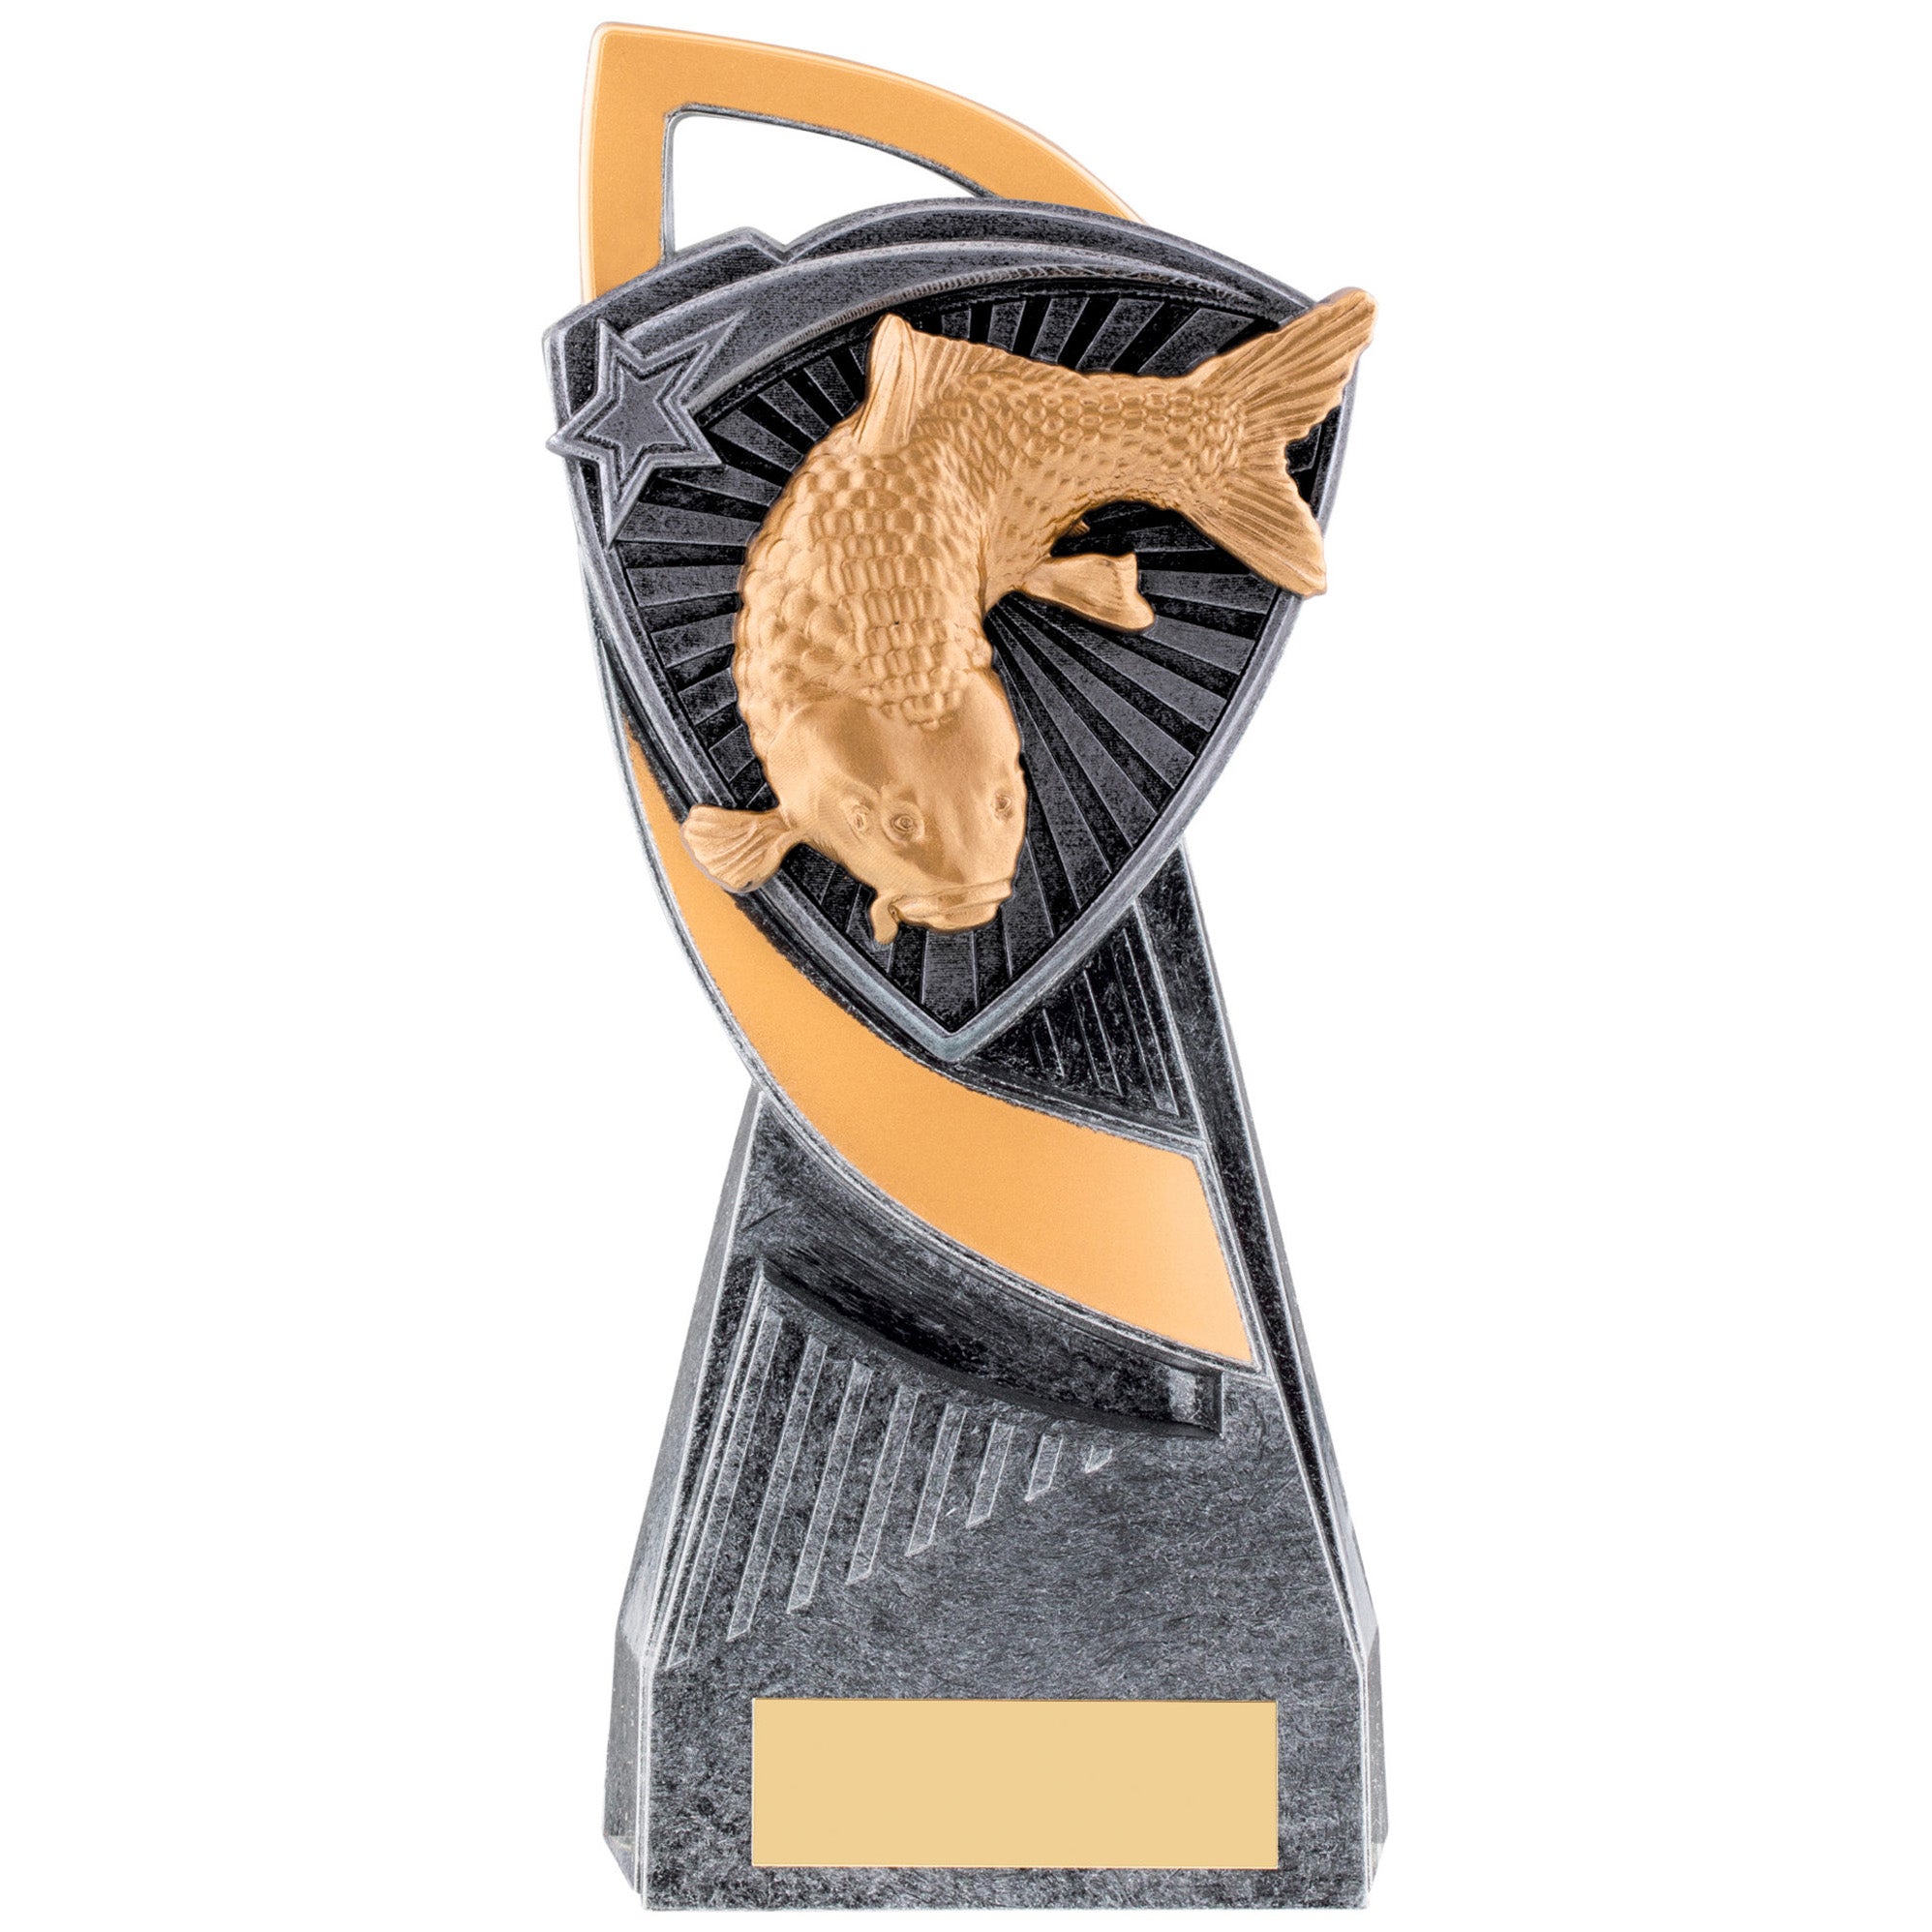 Utopia Fishing Trophy (Gold/Silver)